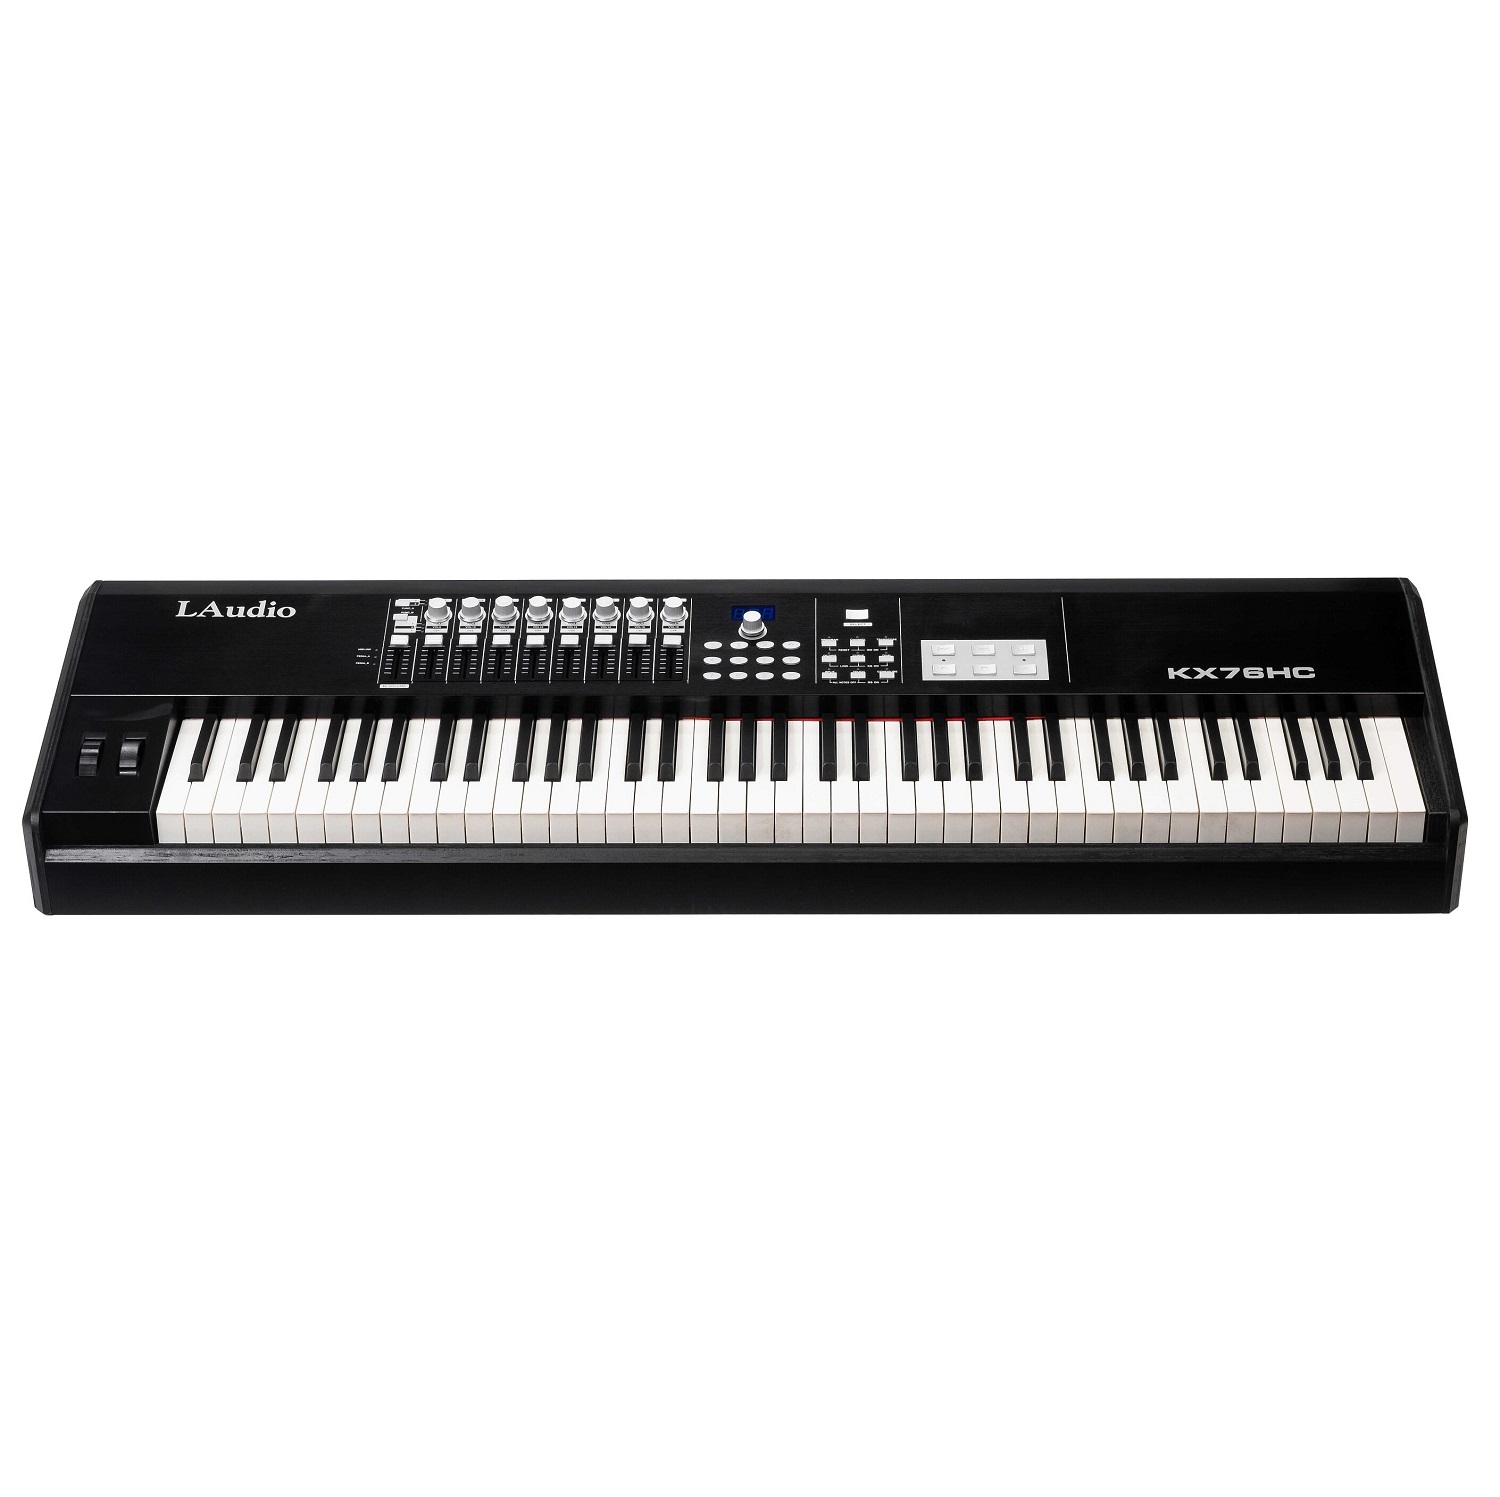 MIDI клавиатуры L Audio KX76HC midi клавиатуры l audio panda 49c